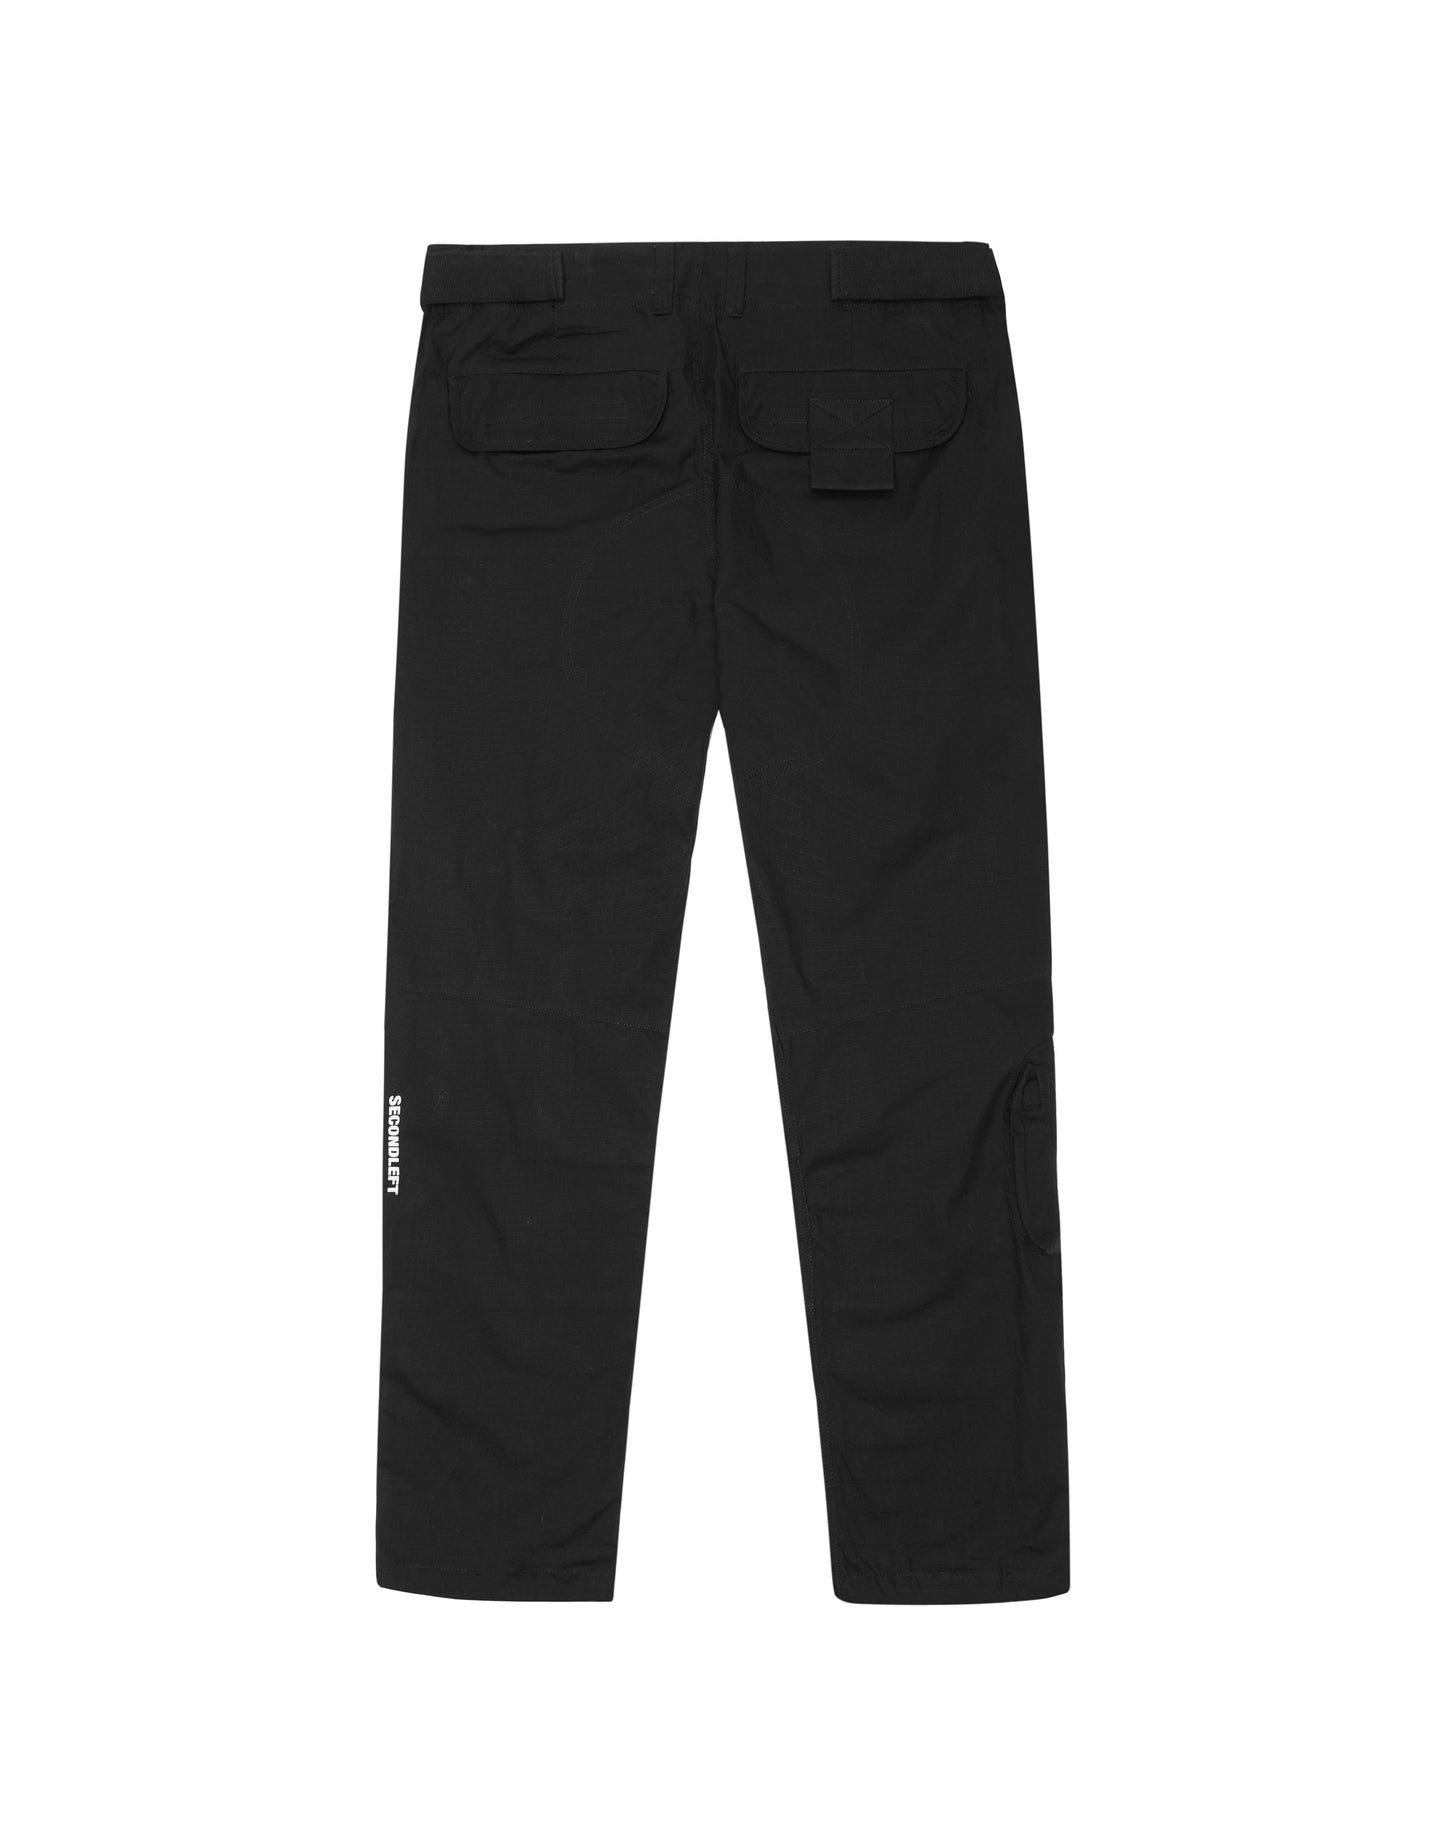 SL S1 Cargo Pants- Black